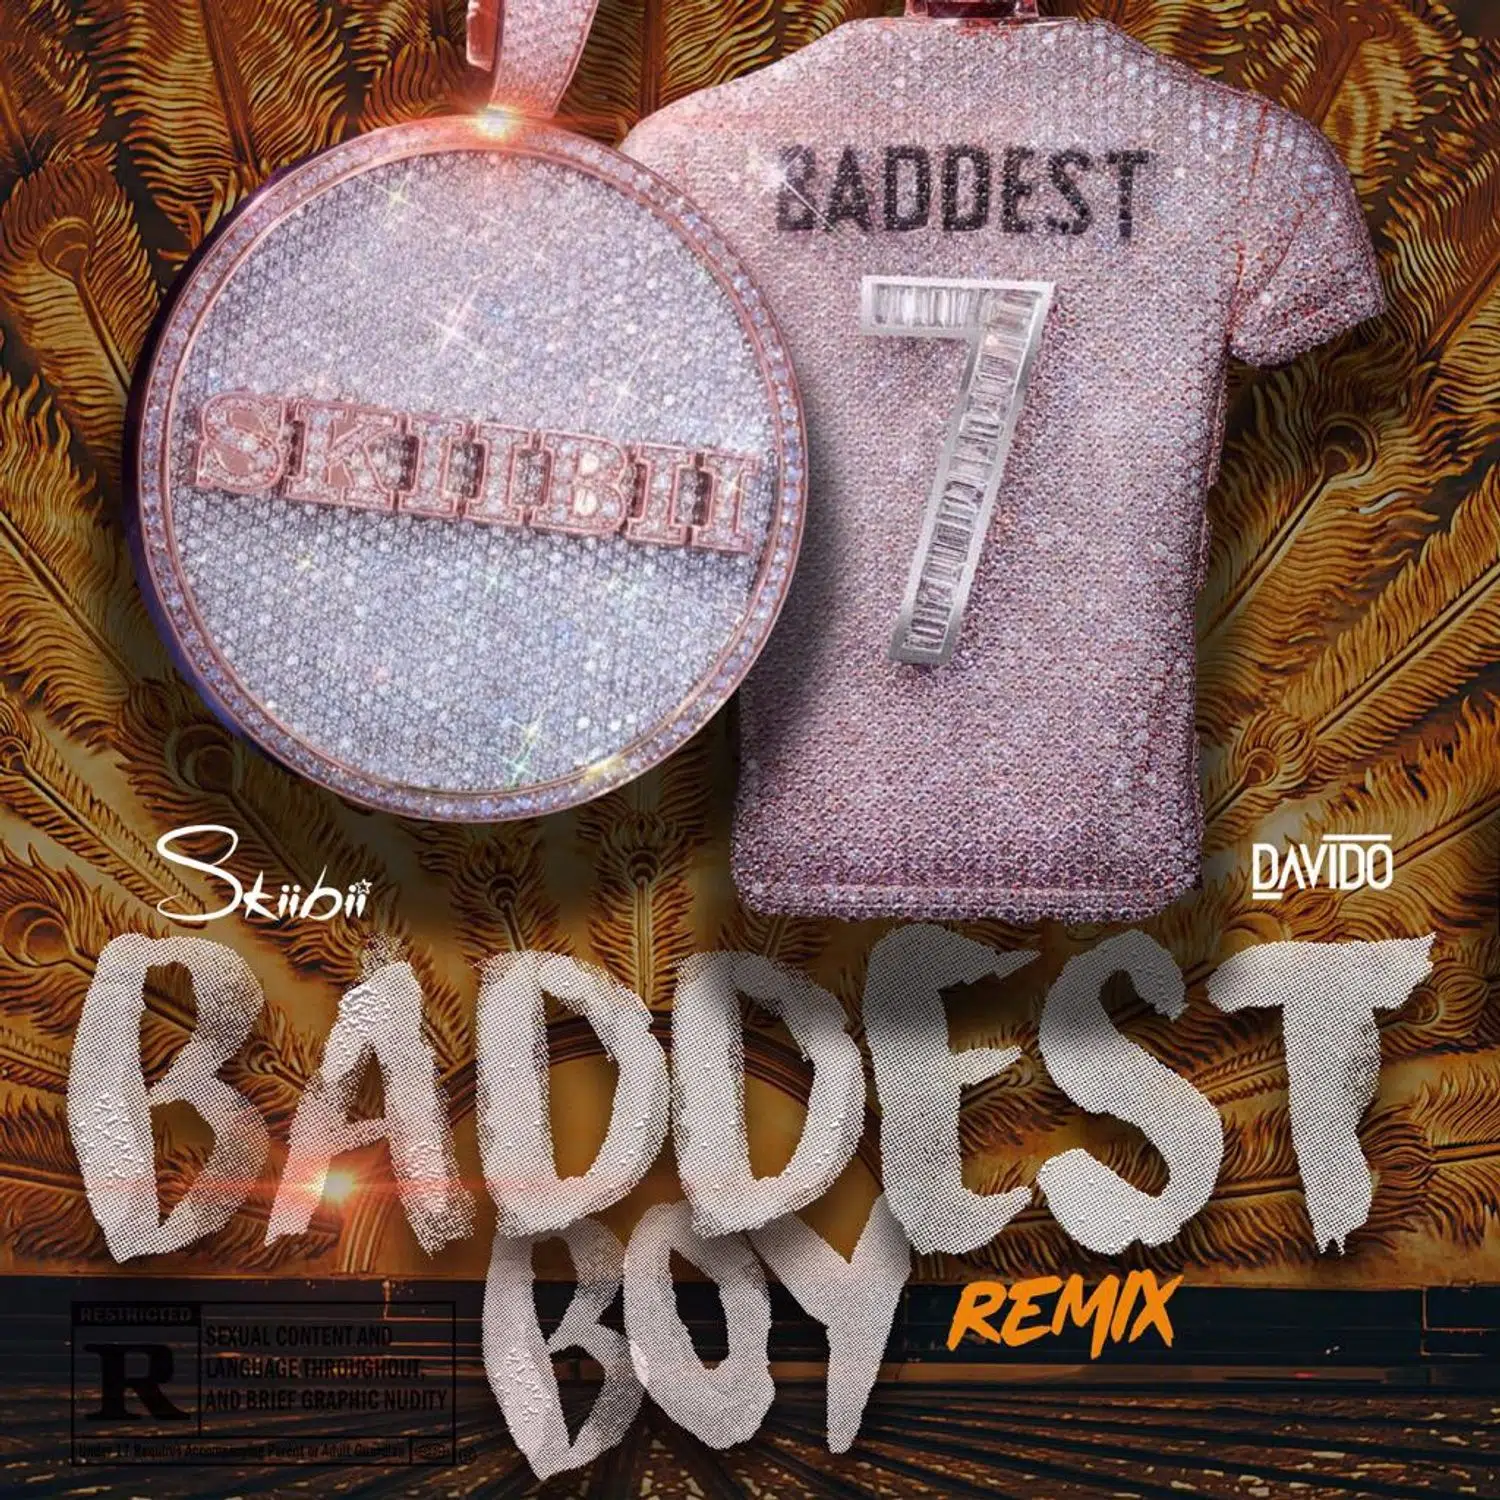 DOWNLOAD: Skiibii Feat Davido – “Baddest Boy Remix” Mp3